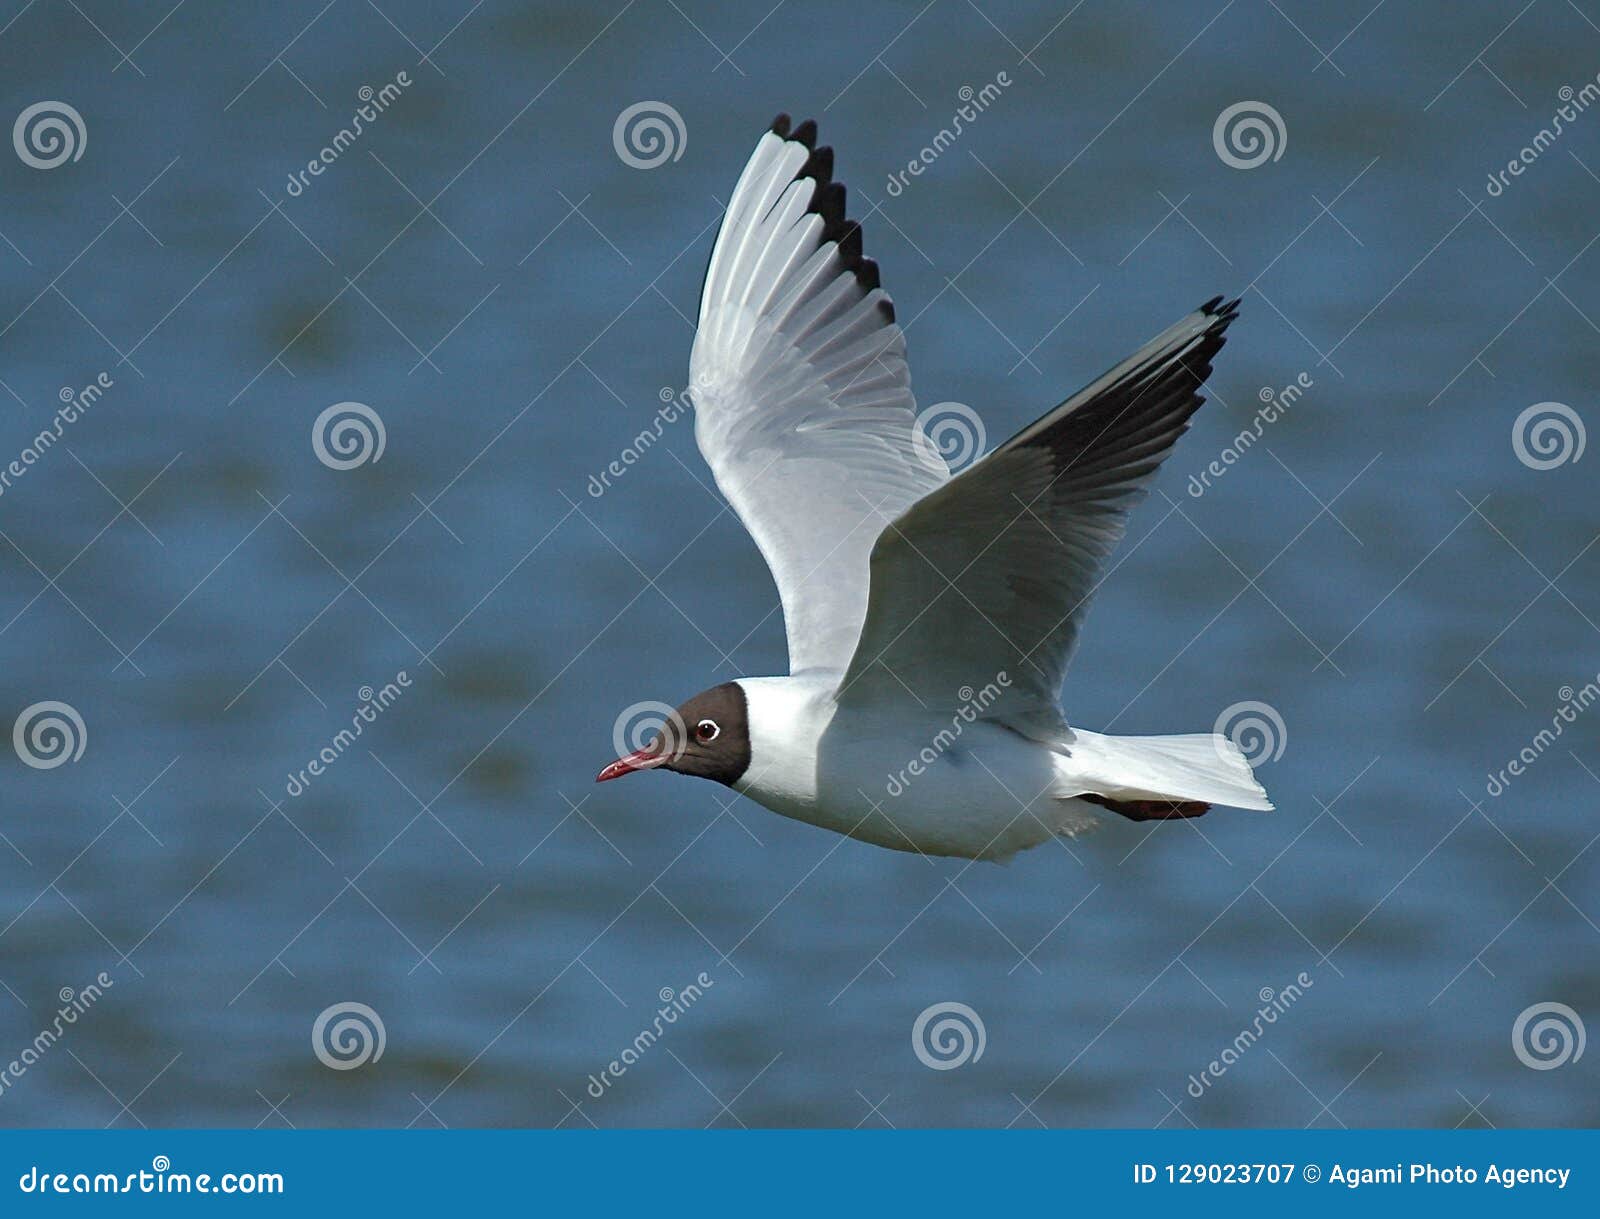 black-headed gull, kokmeeuw, larus ridibundus